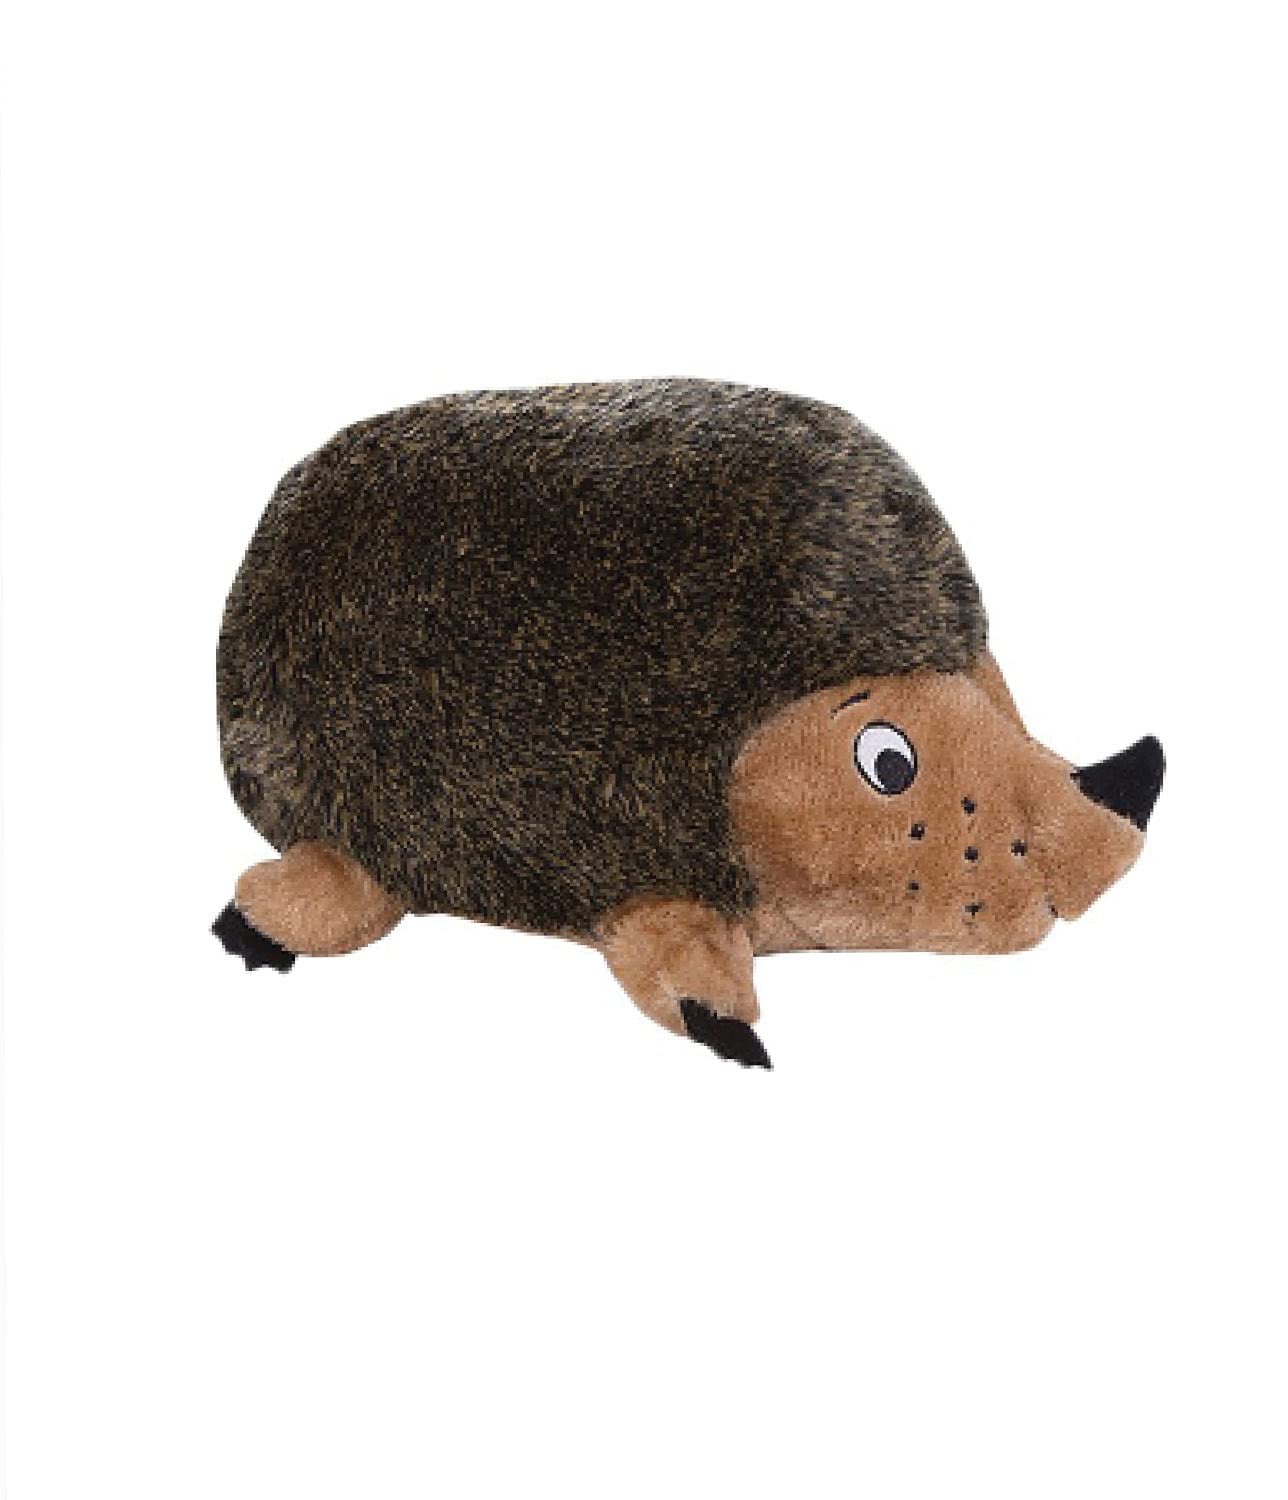 Outward Hound Hedgehogz Plush Dog Toy (Small) $2.79 + Free Shipping w/ Prime or $25+